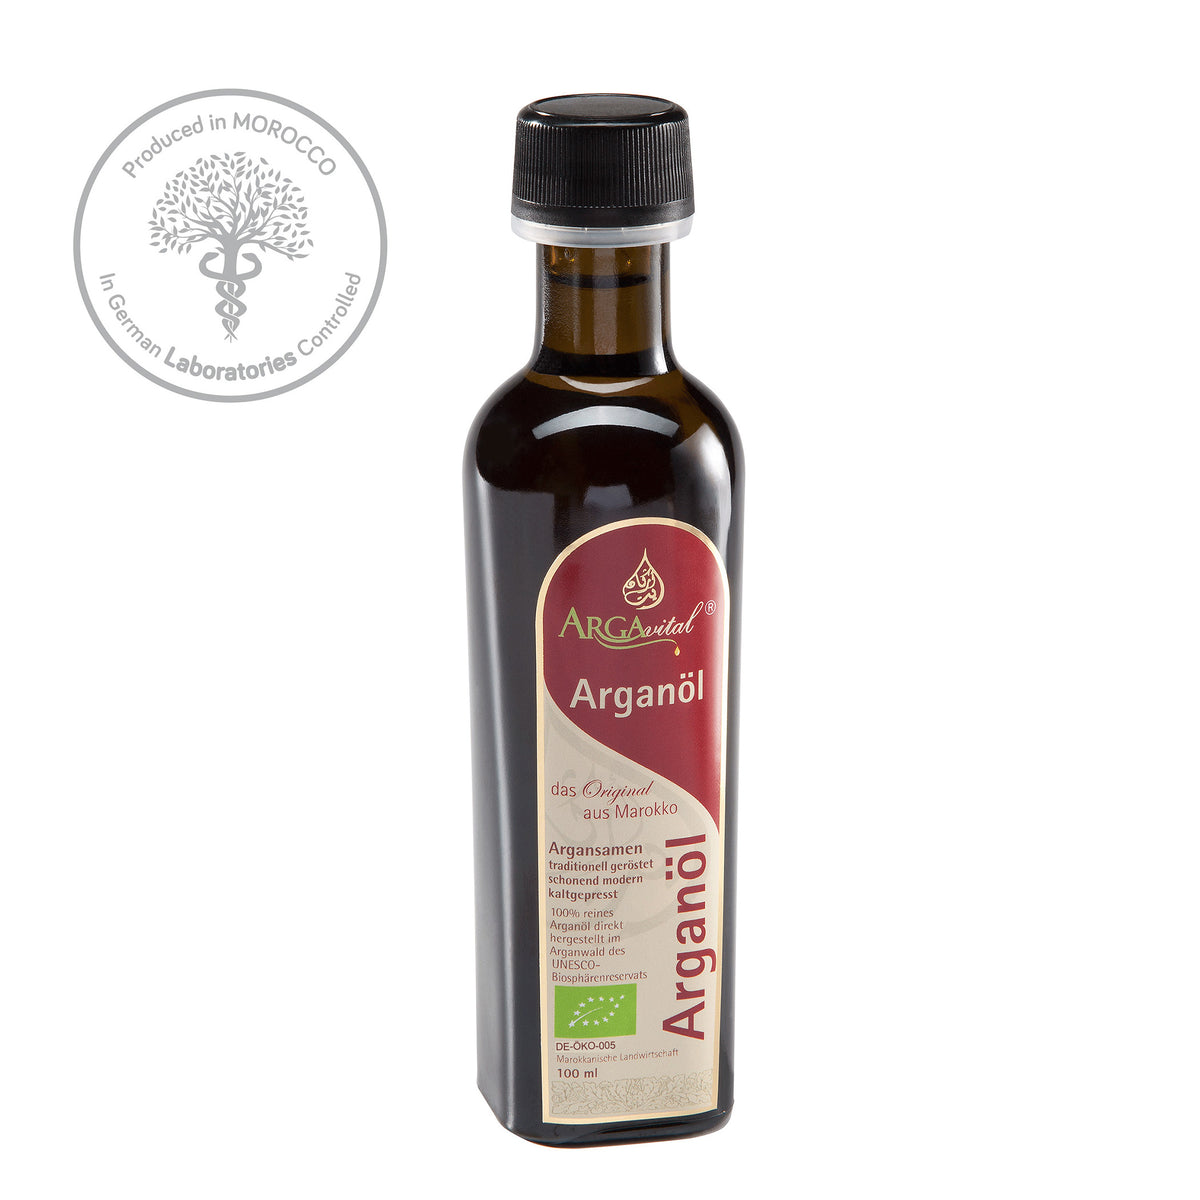 Premium Organic Argan Oil 100 Ml from Roasted Argan Seeds - 100 ml